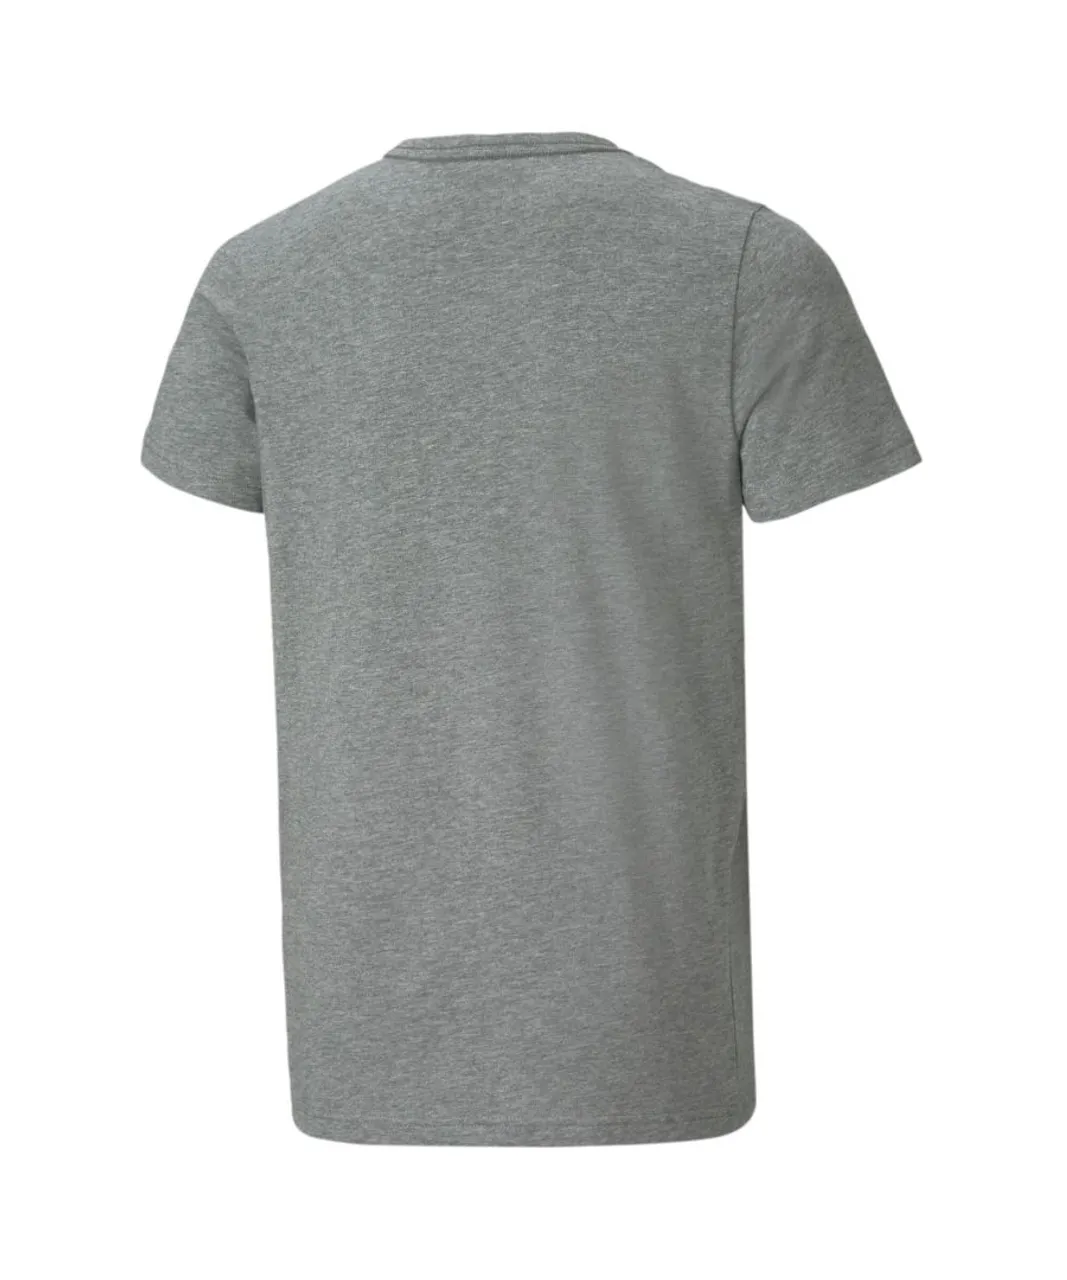 Puma Childrens Unisex Essentials Logo Youth T-Shirt - Grey Cotton